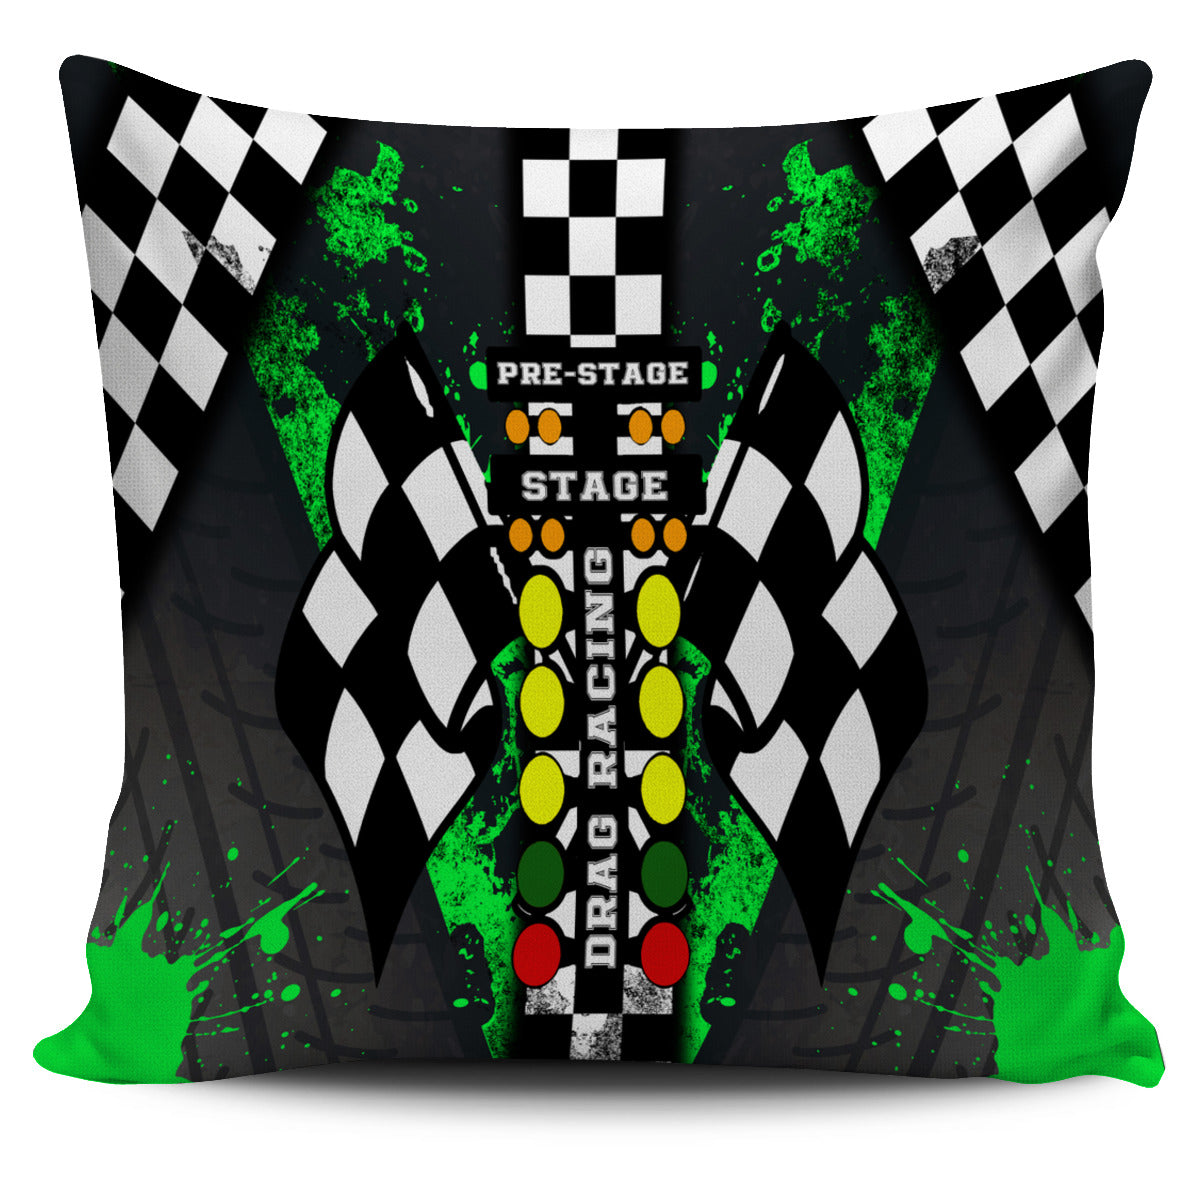 Drag Racing Pillow Covers Pistachio